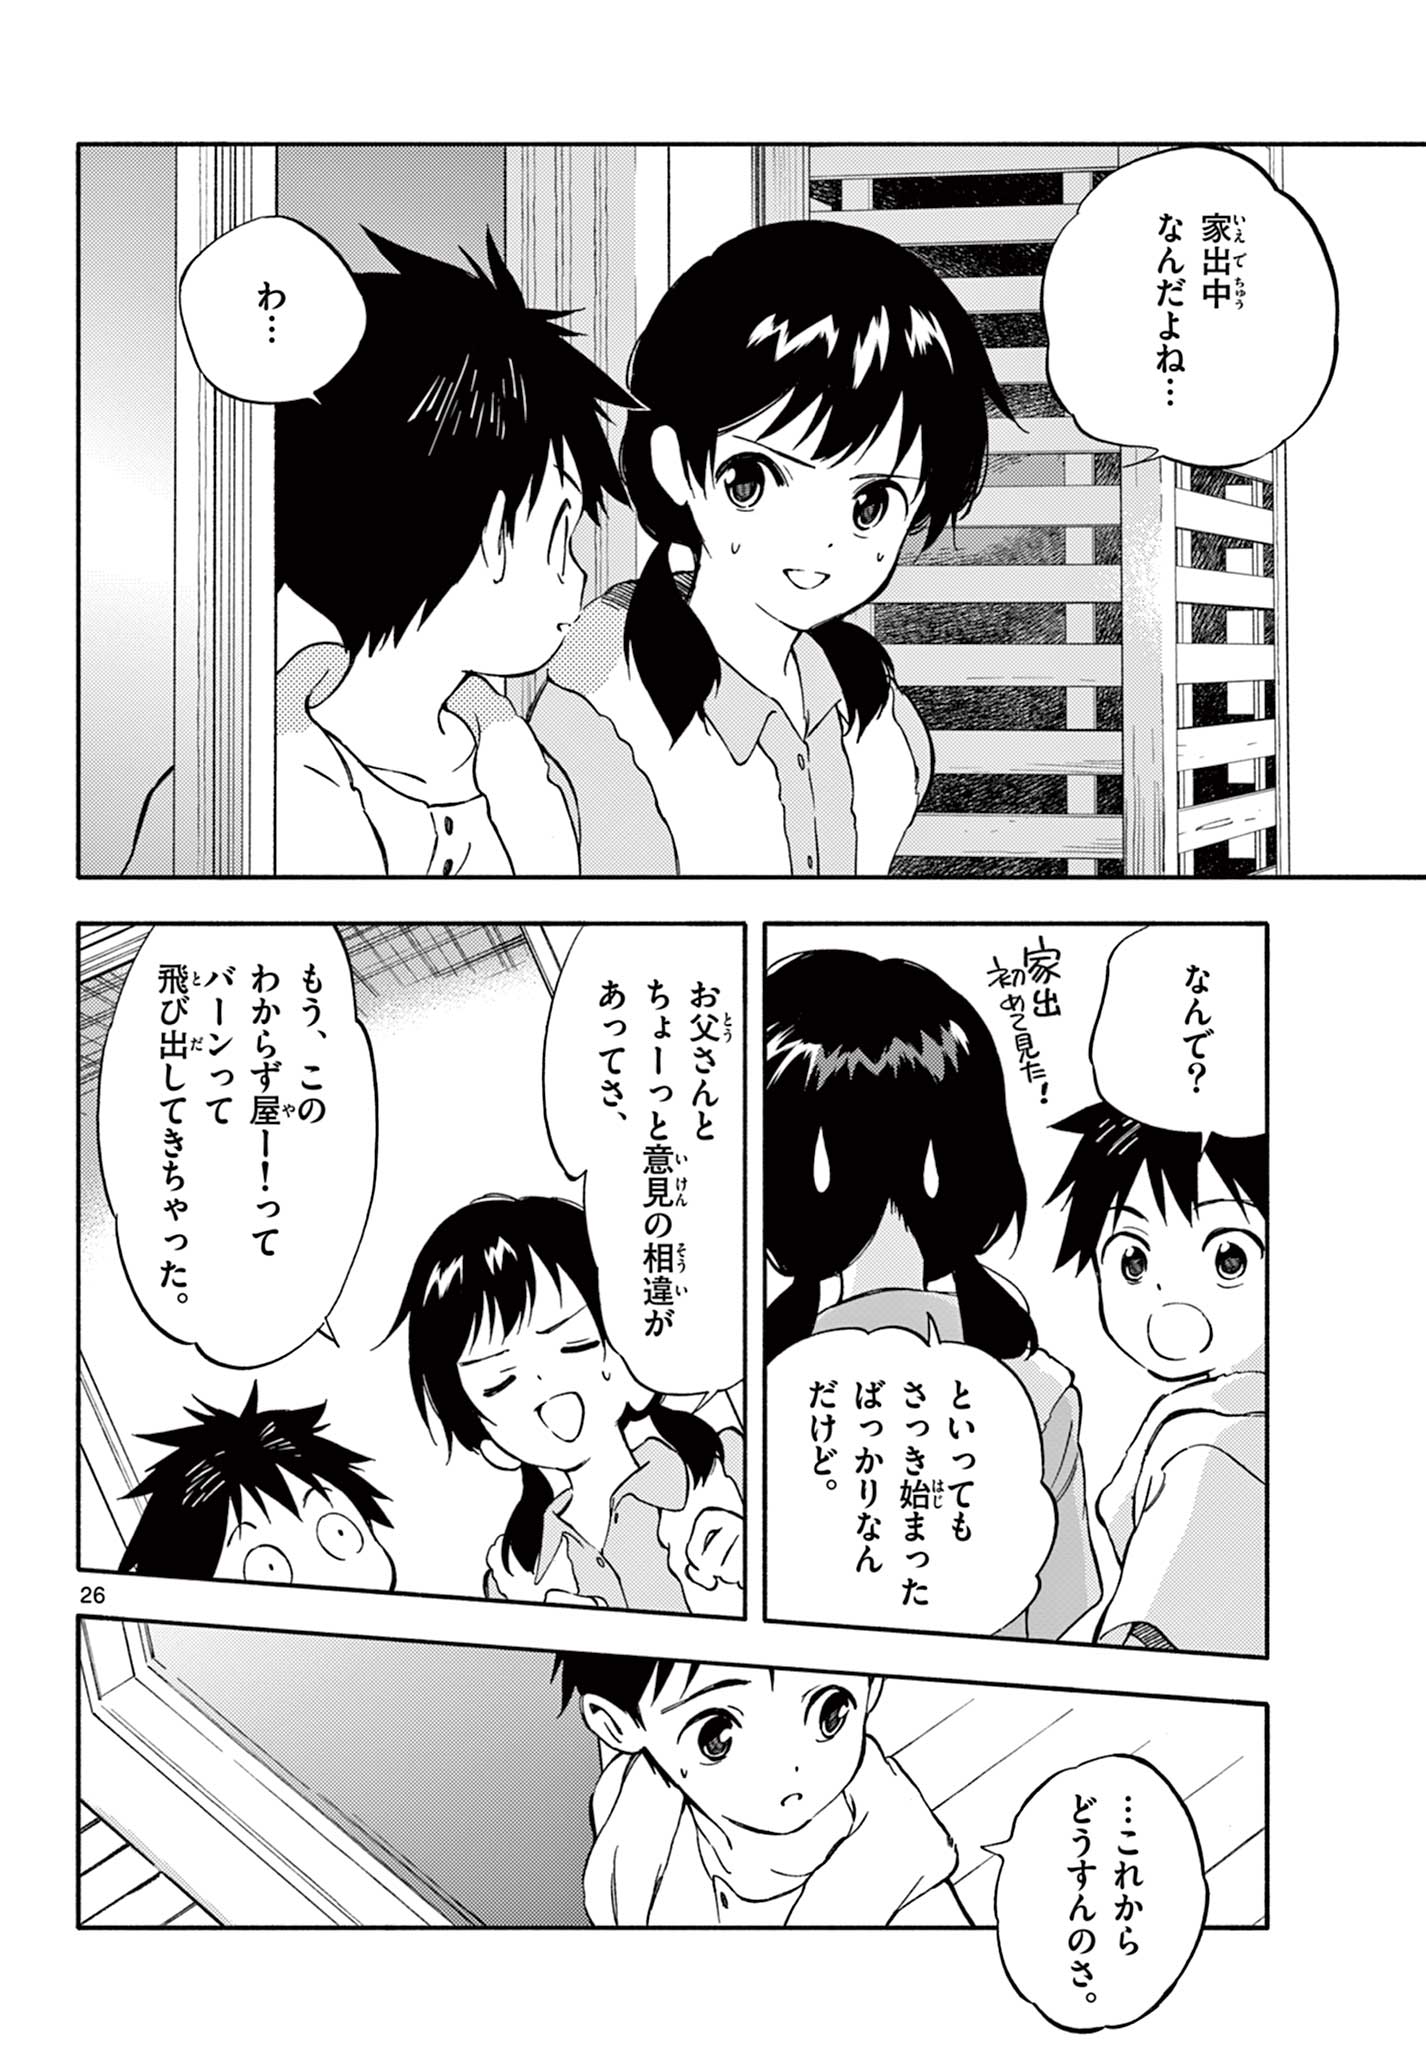 Nami no Shijima no Horizont - Chapter 12.2 - Page 12